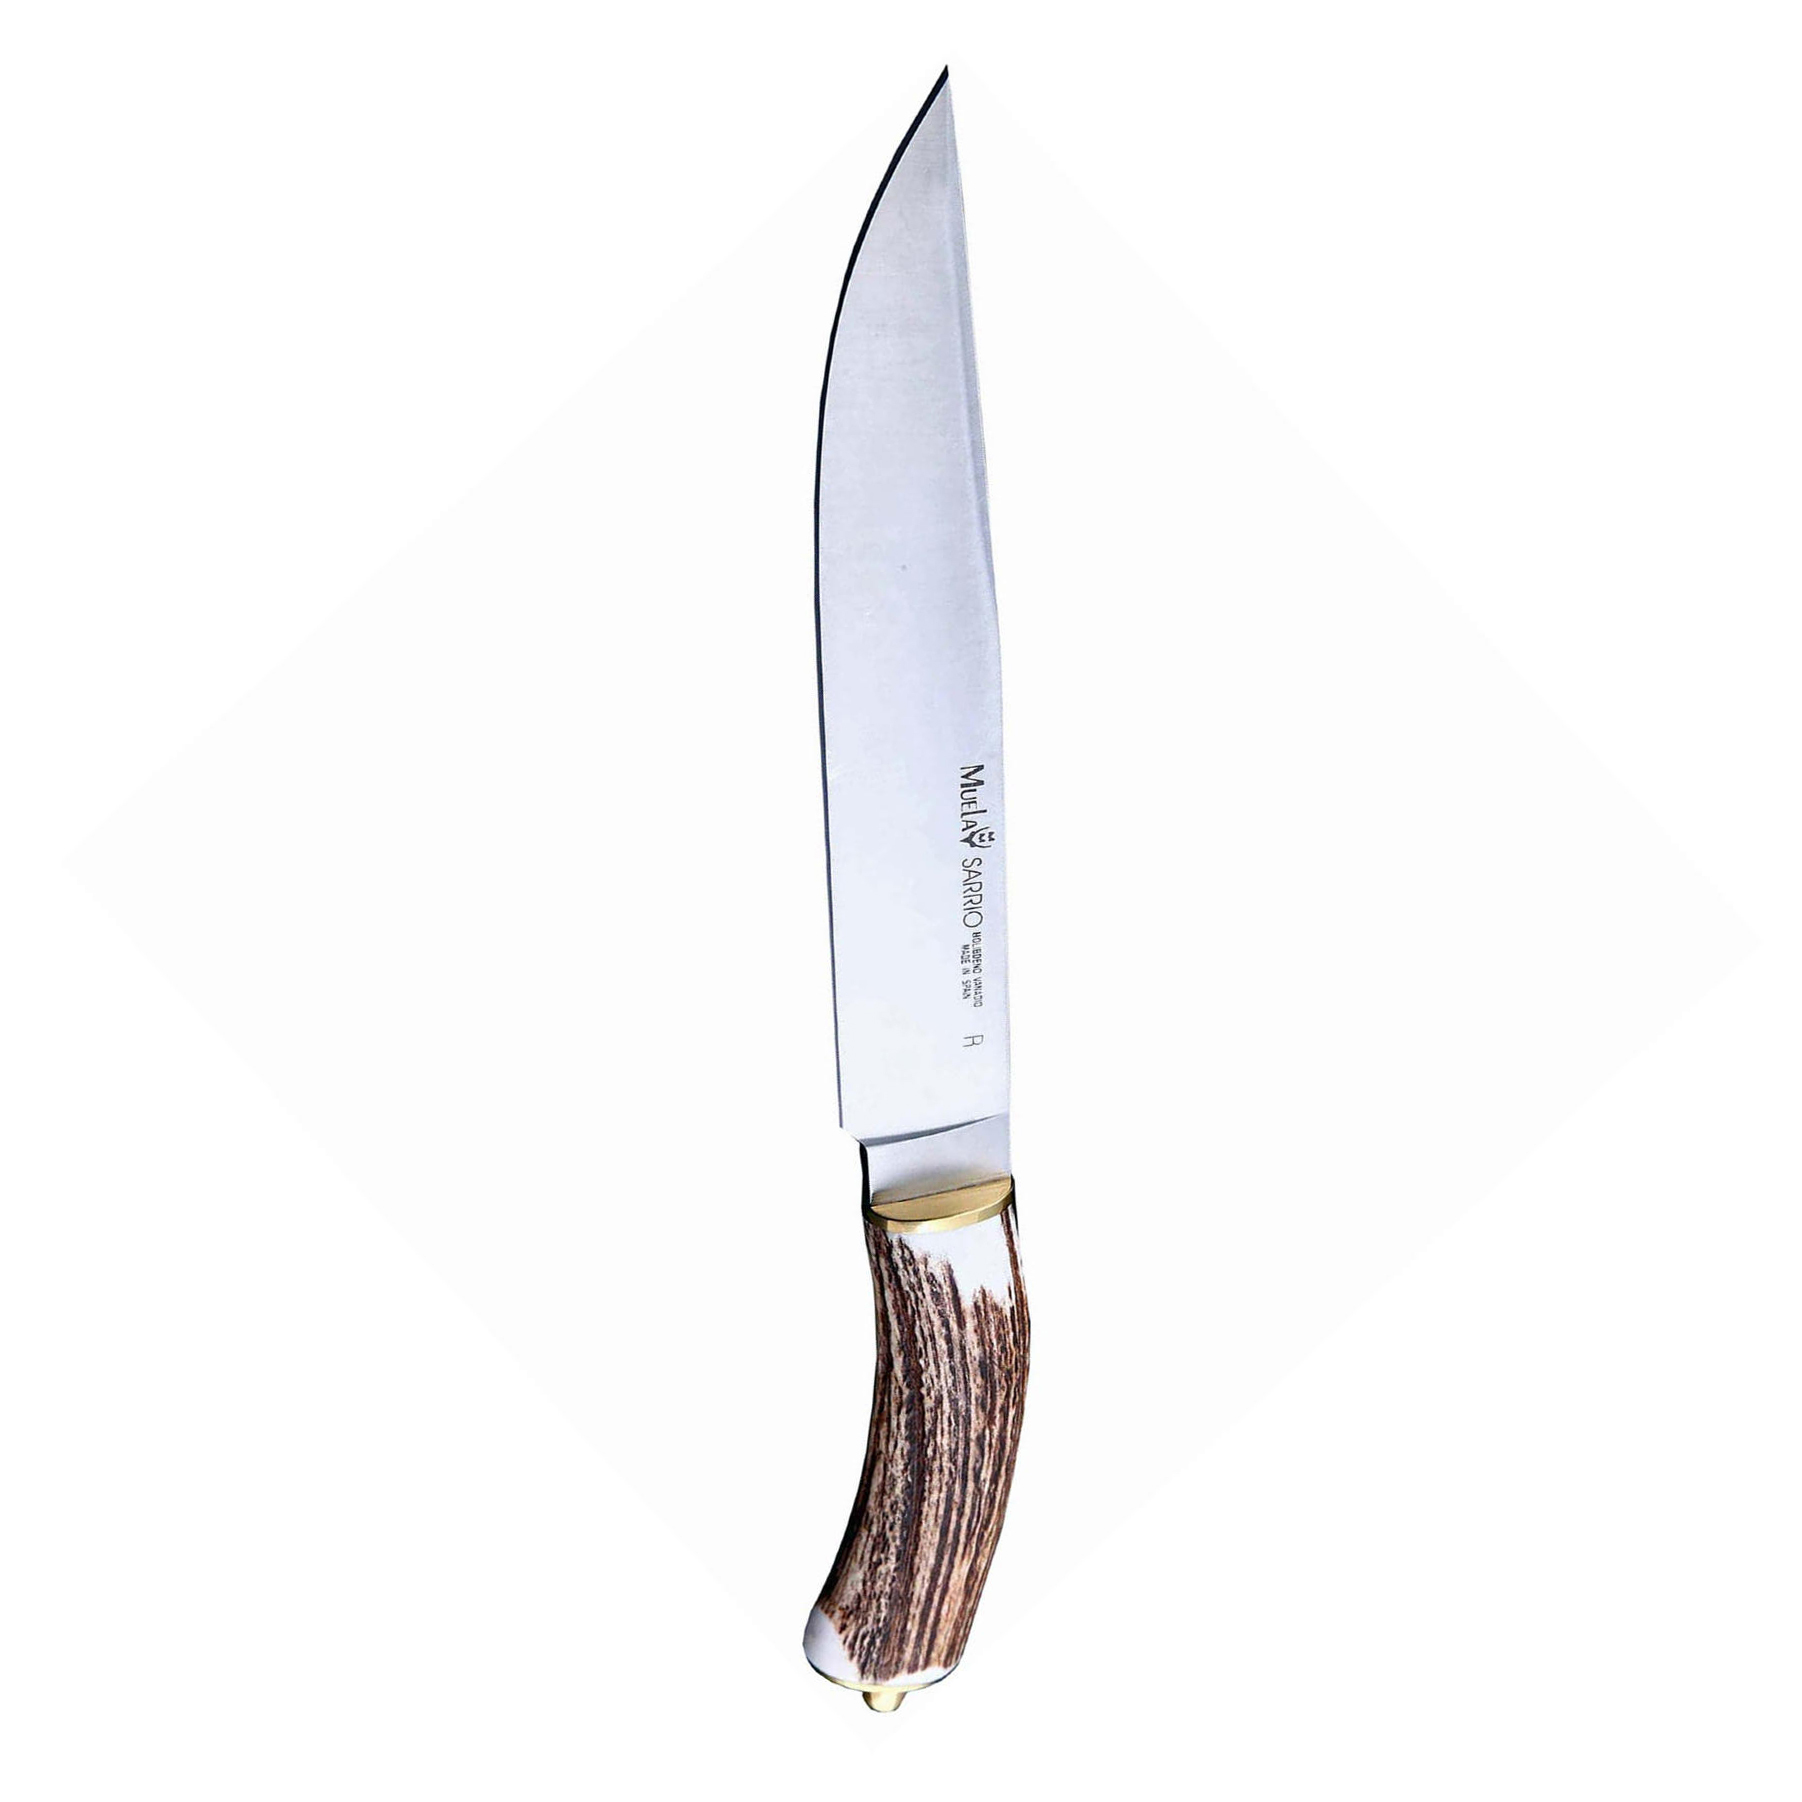 Нож с фиксированным клинком Sarrio, Stag Handle 23.0 см. - фото 2